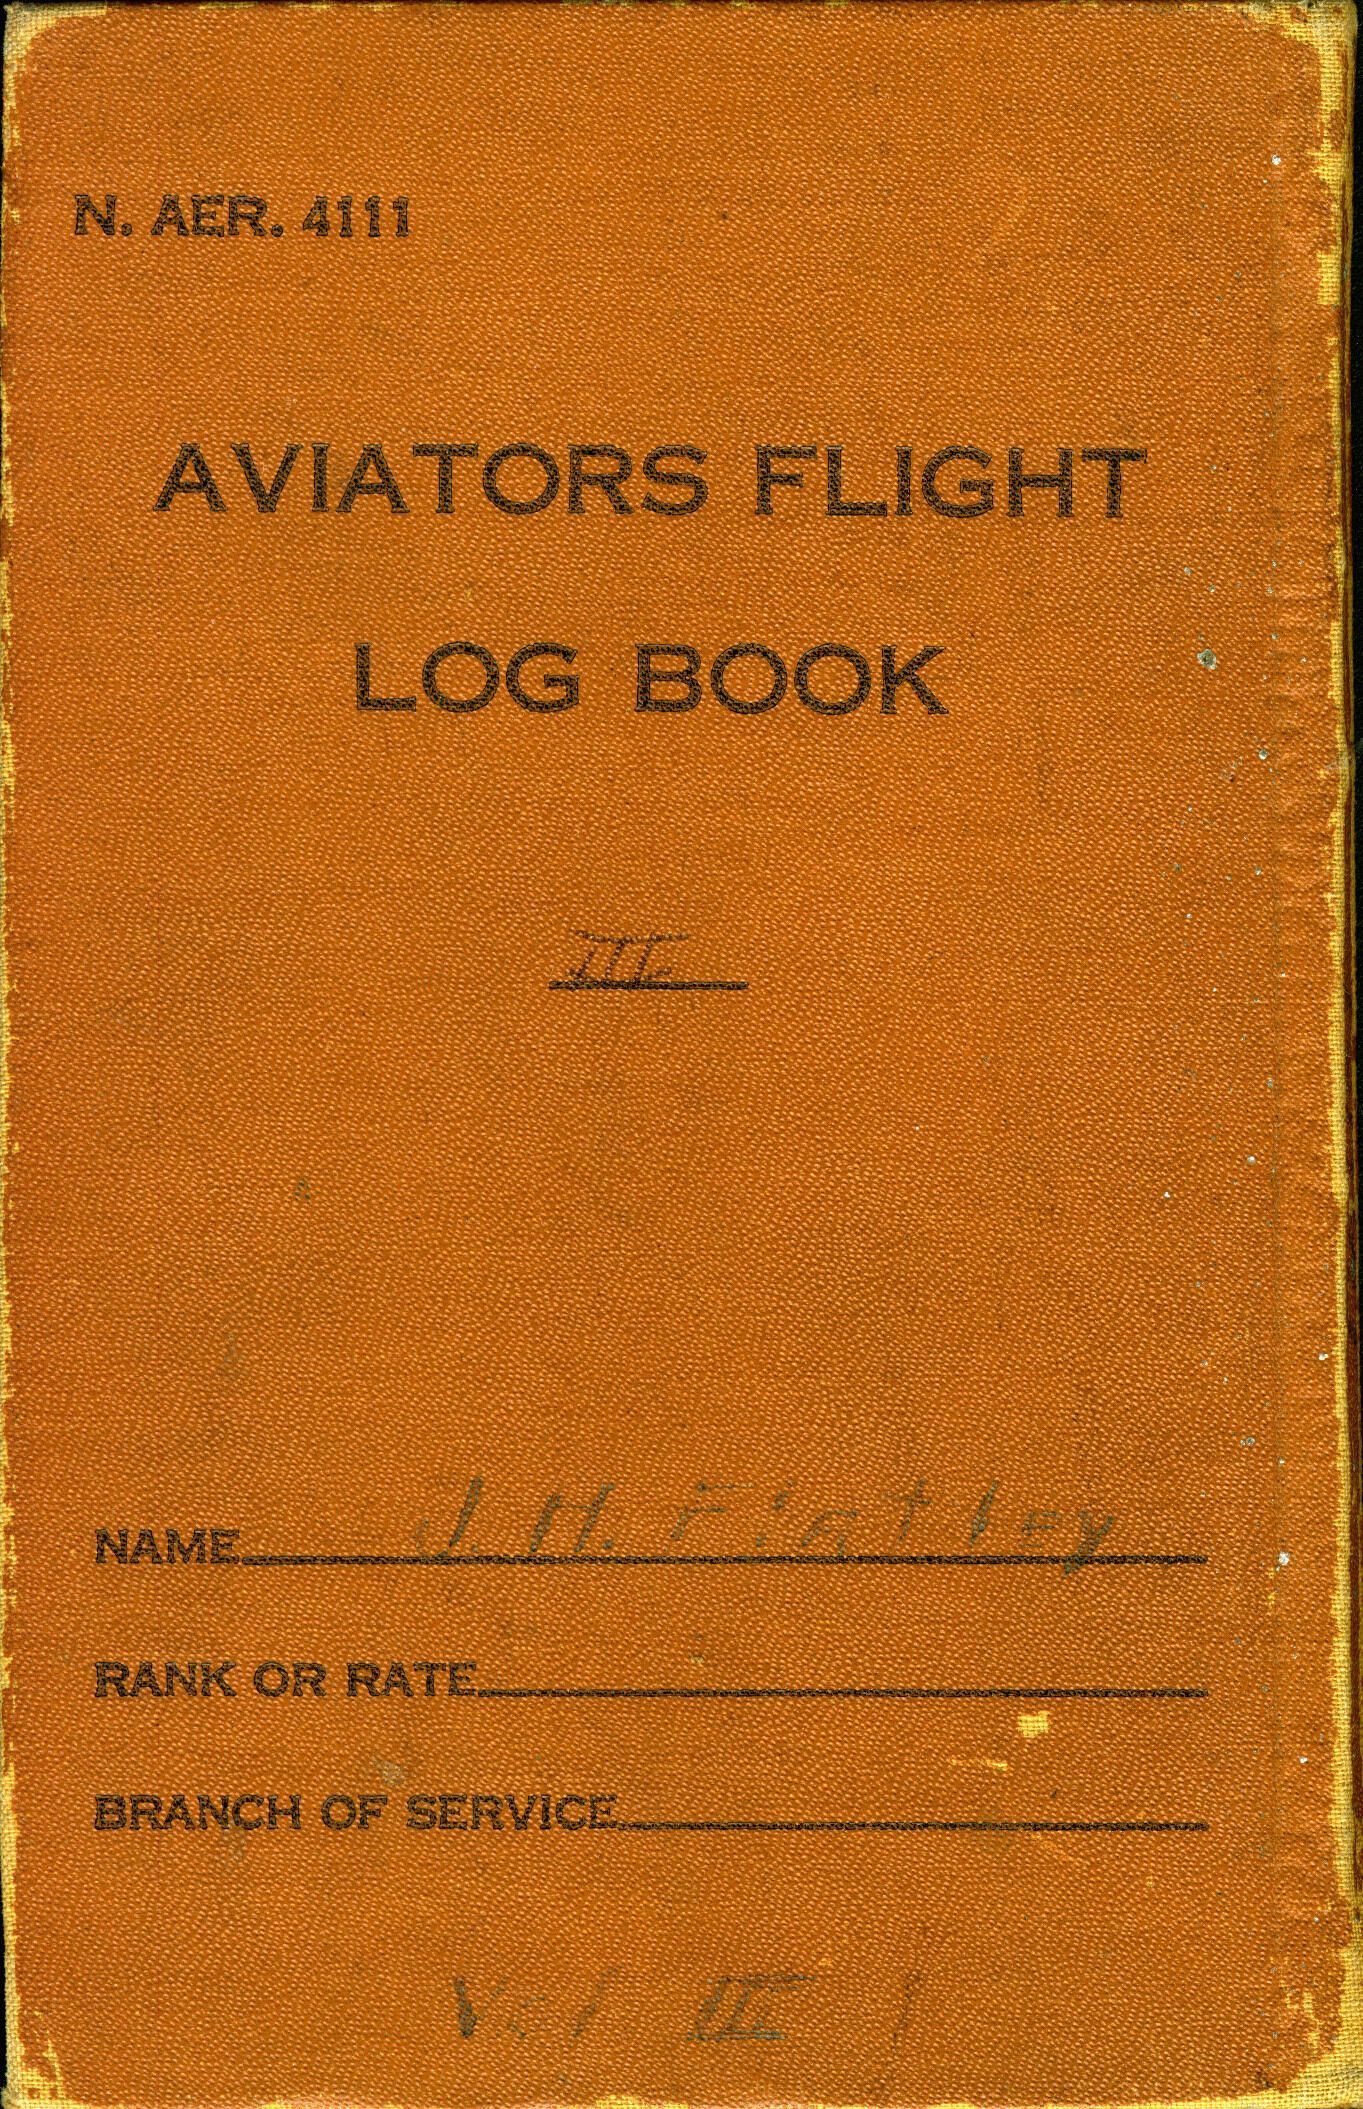 Primary Image of Aviators Flight Log Book (1934-1936) of James H. Flatley, Jr.